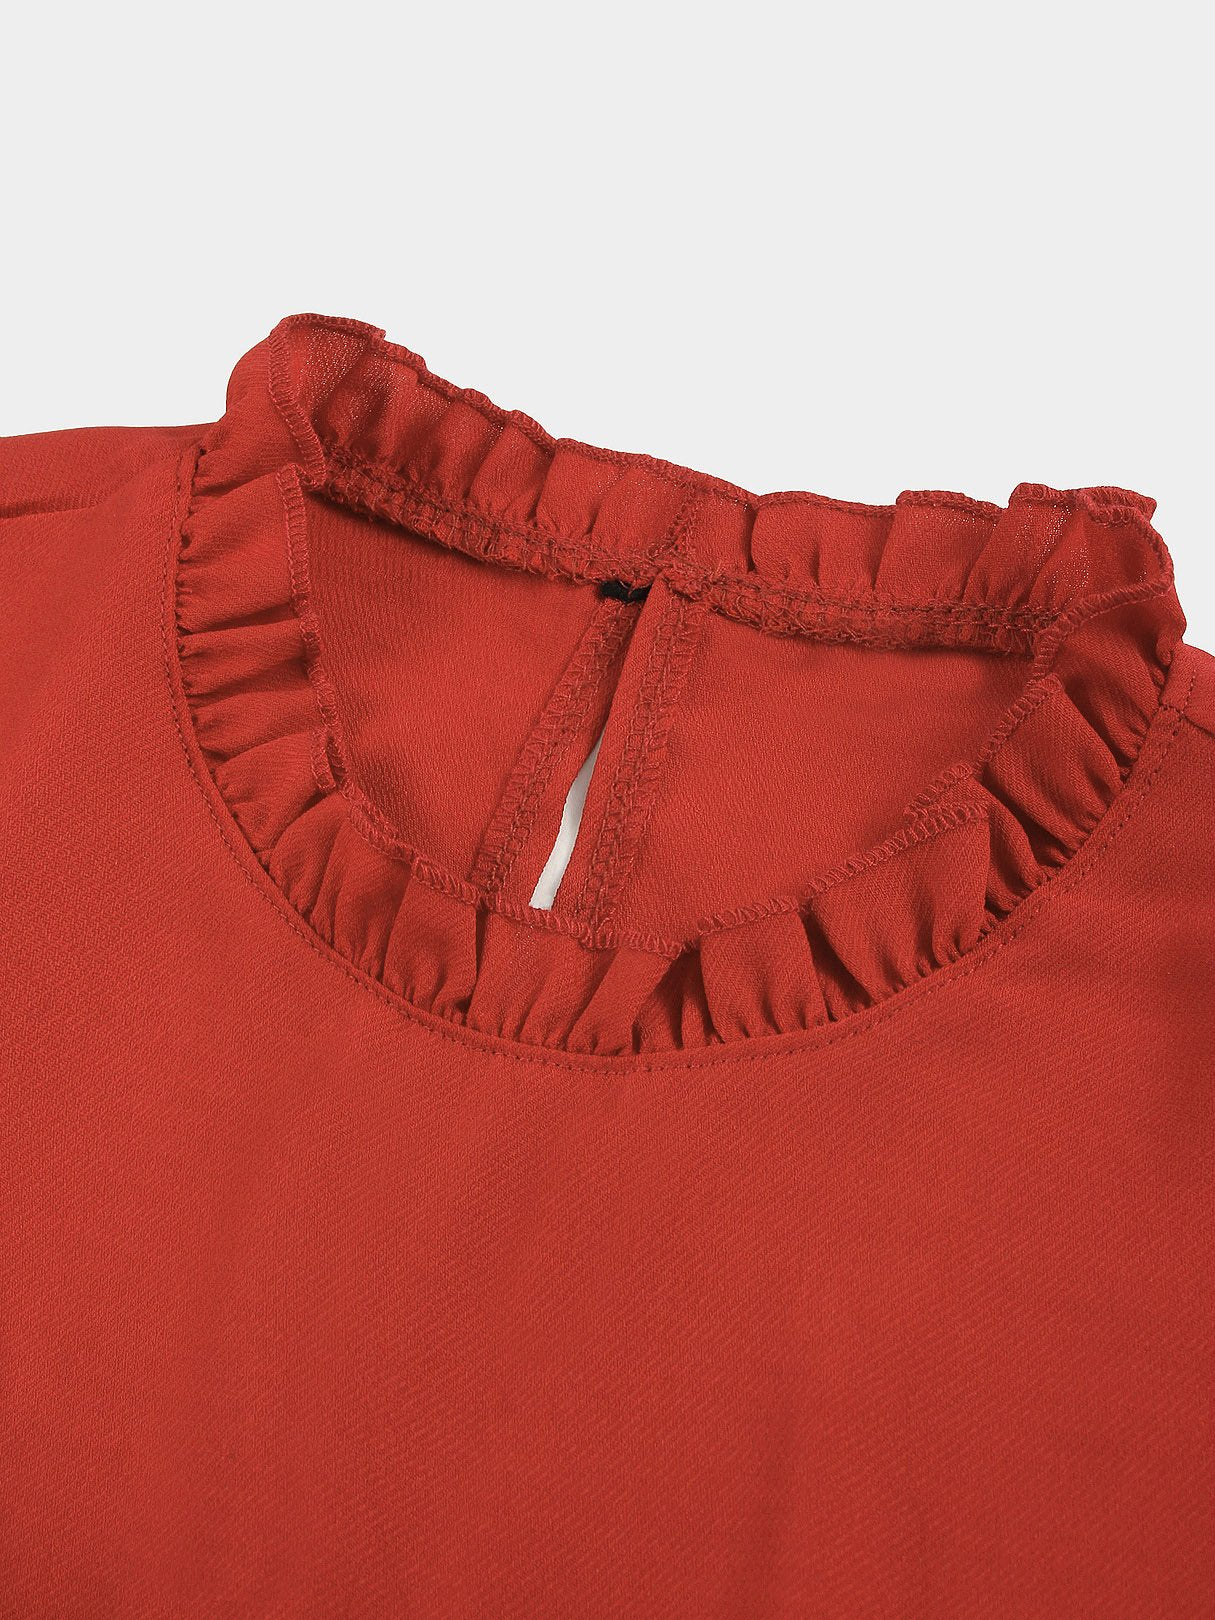 Turtleneck Sweater Midi Dress